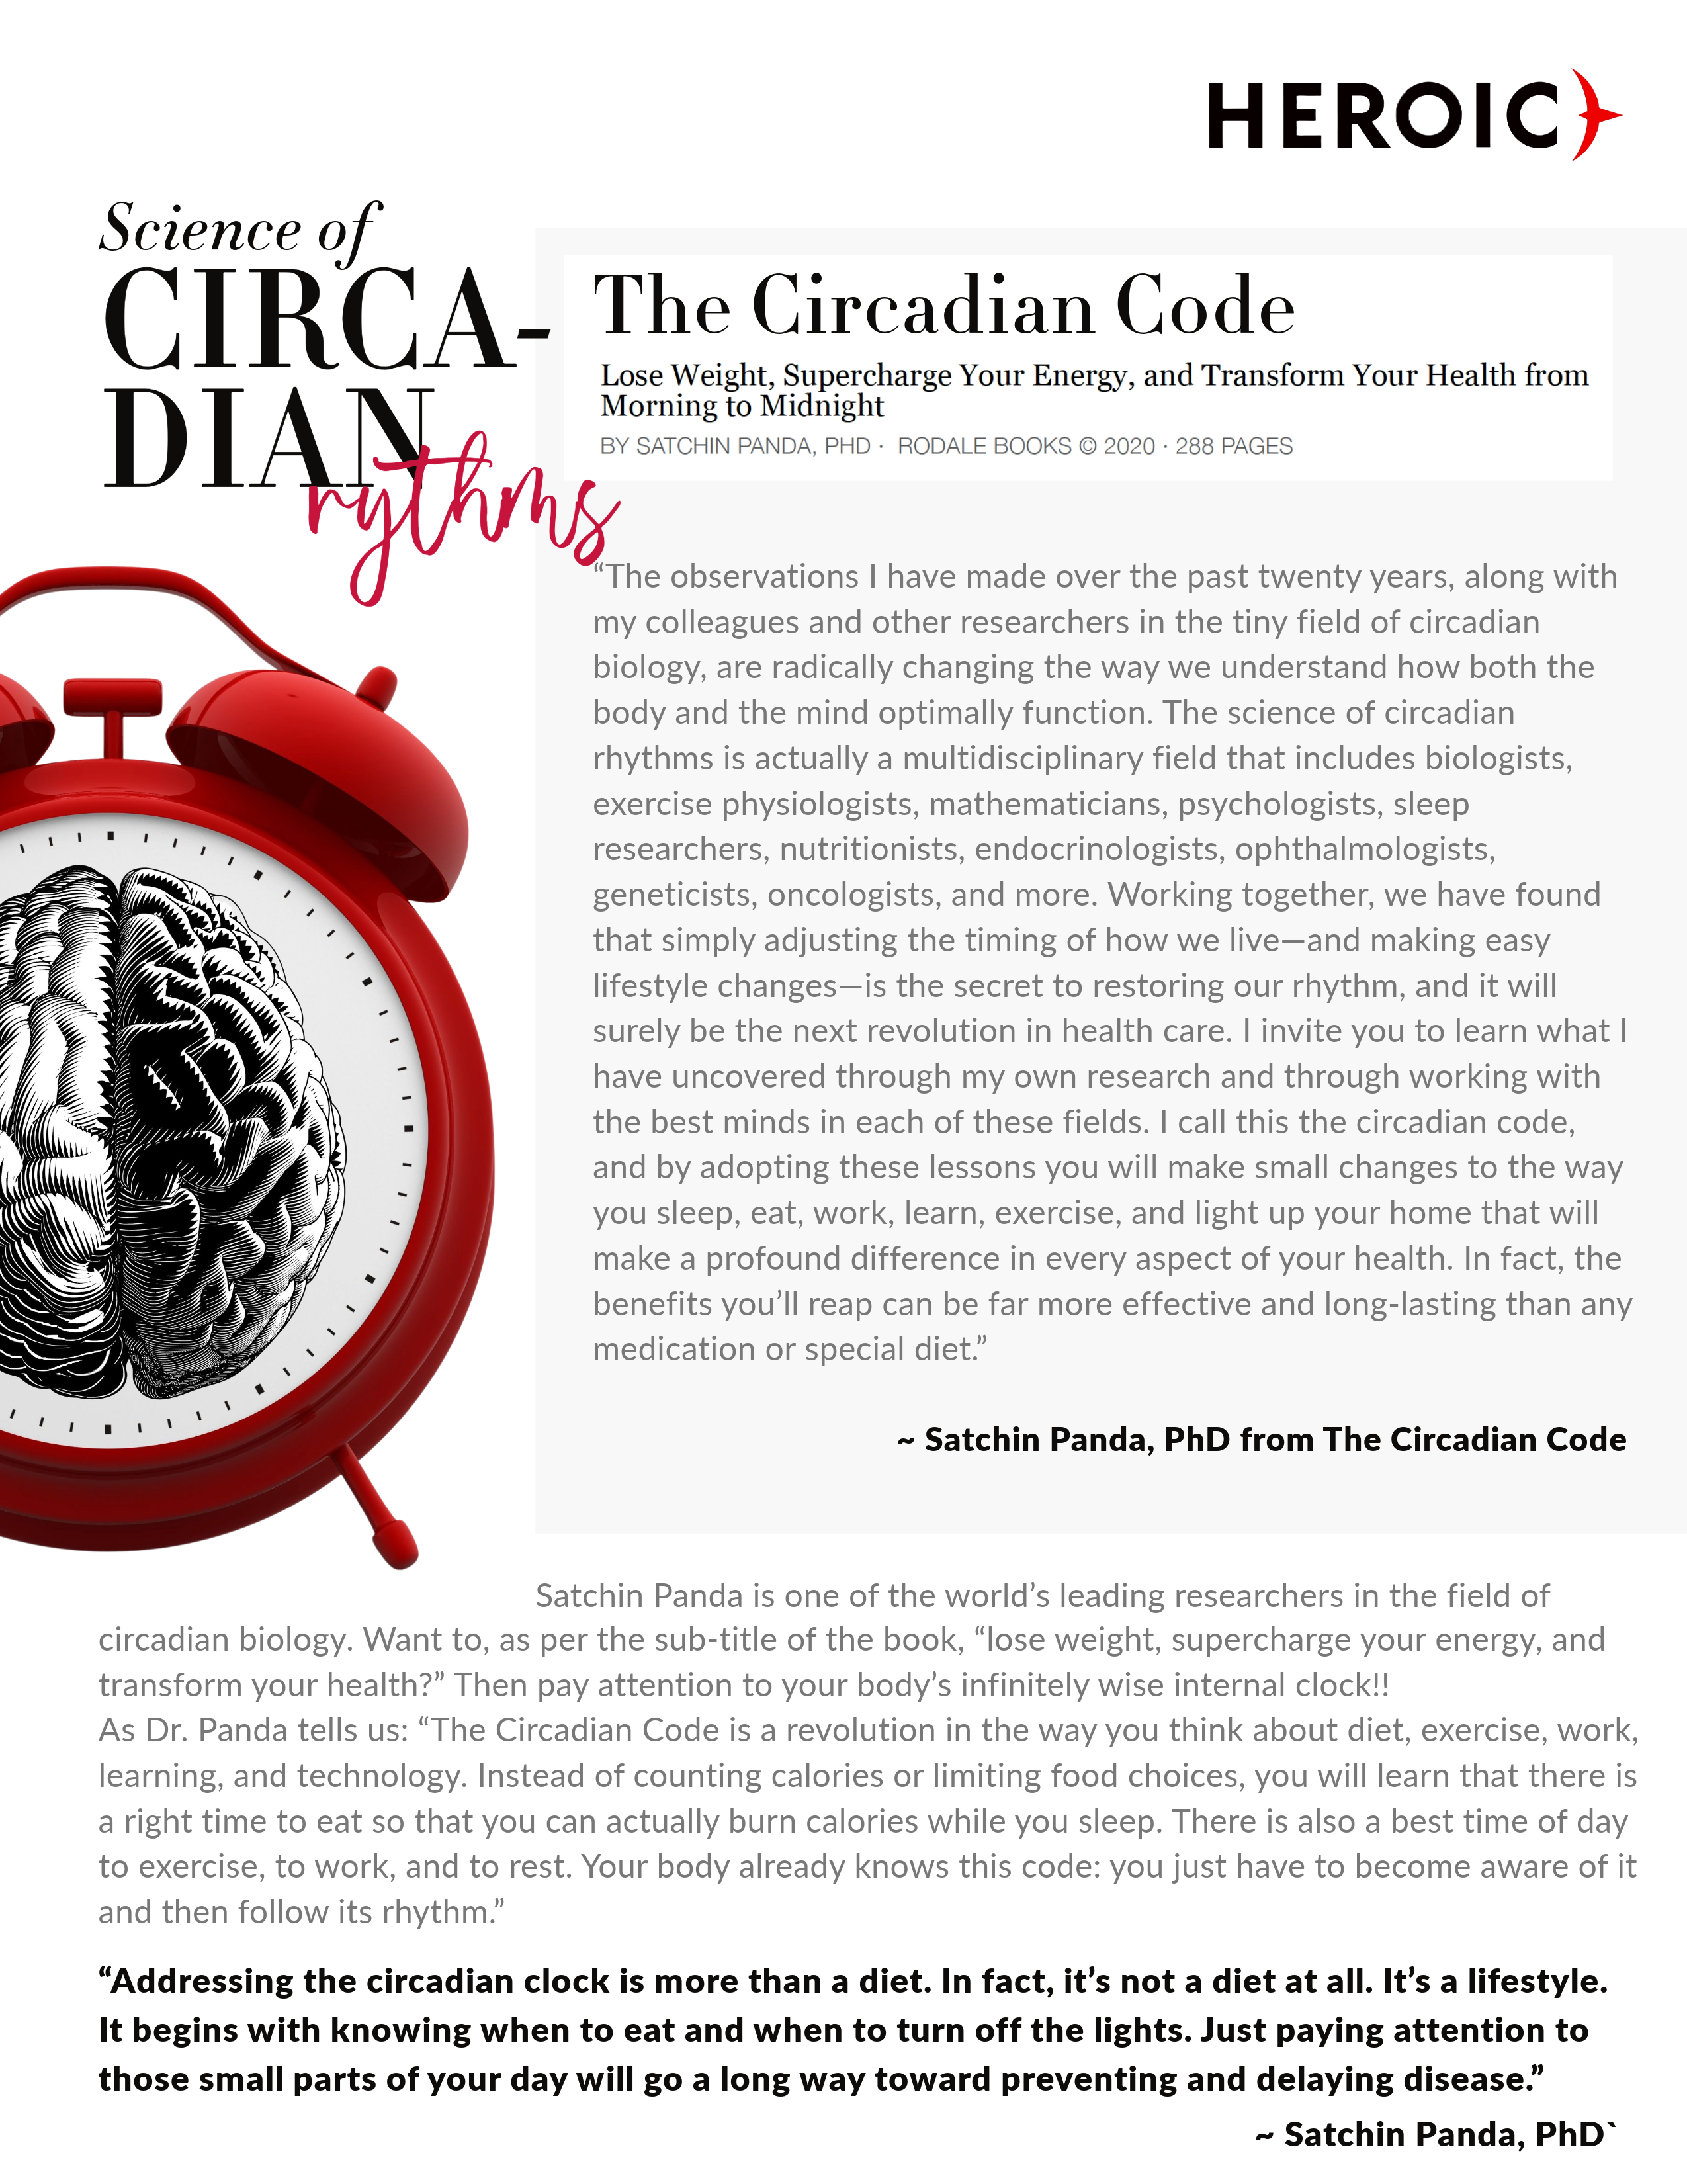 The Circadian Code (1)